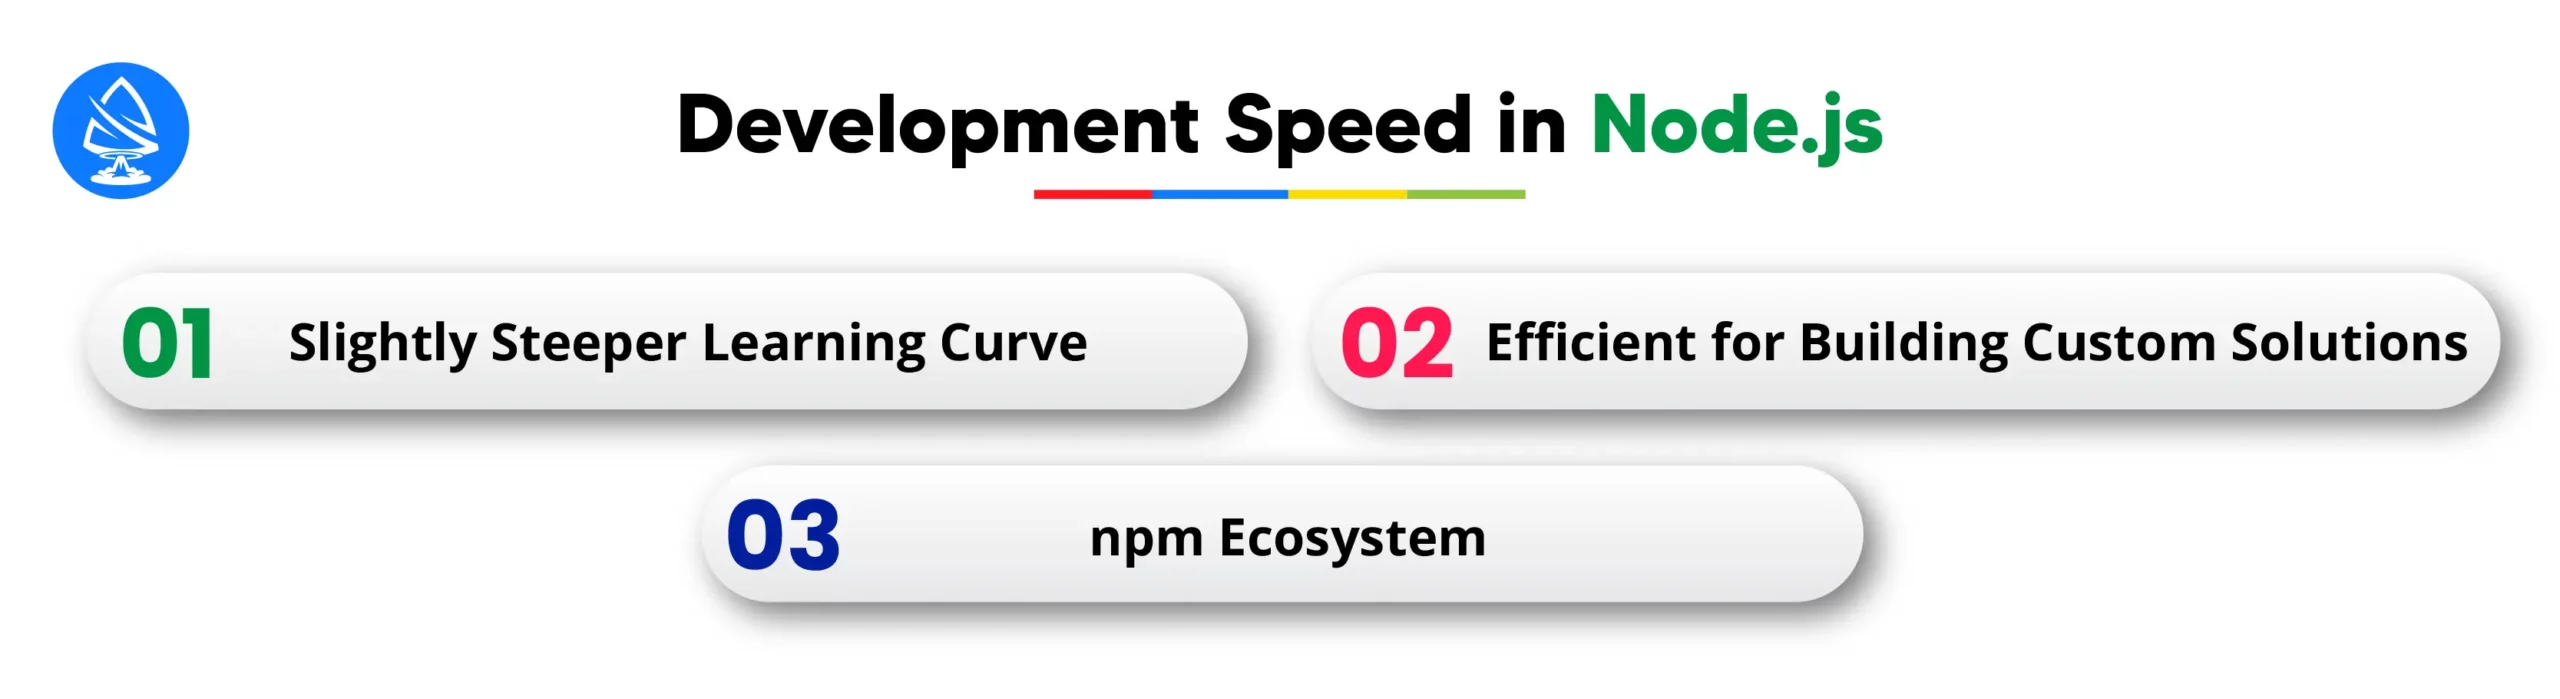 Development Speed in Node.js 